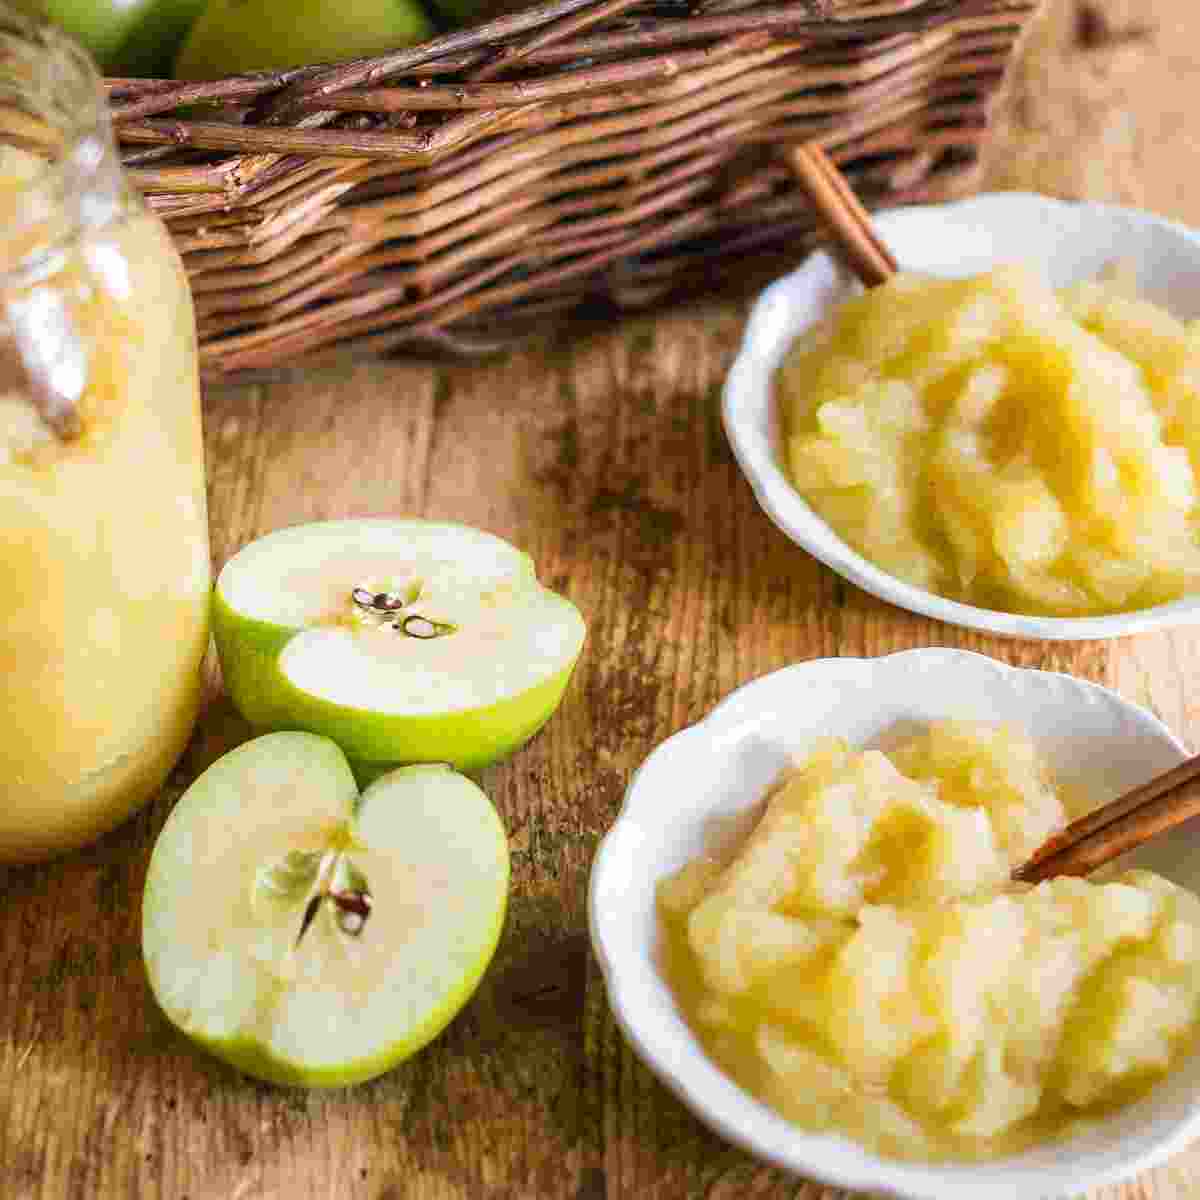 How to make homemade Applesauce